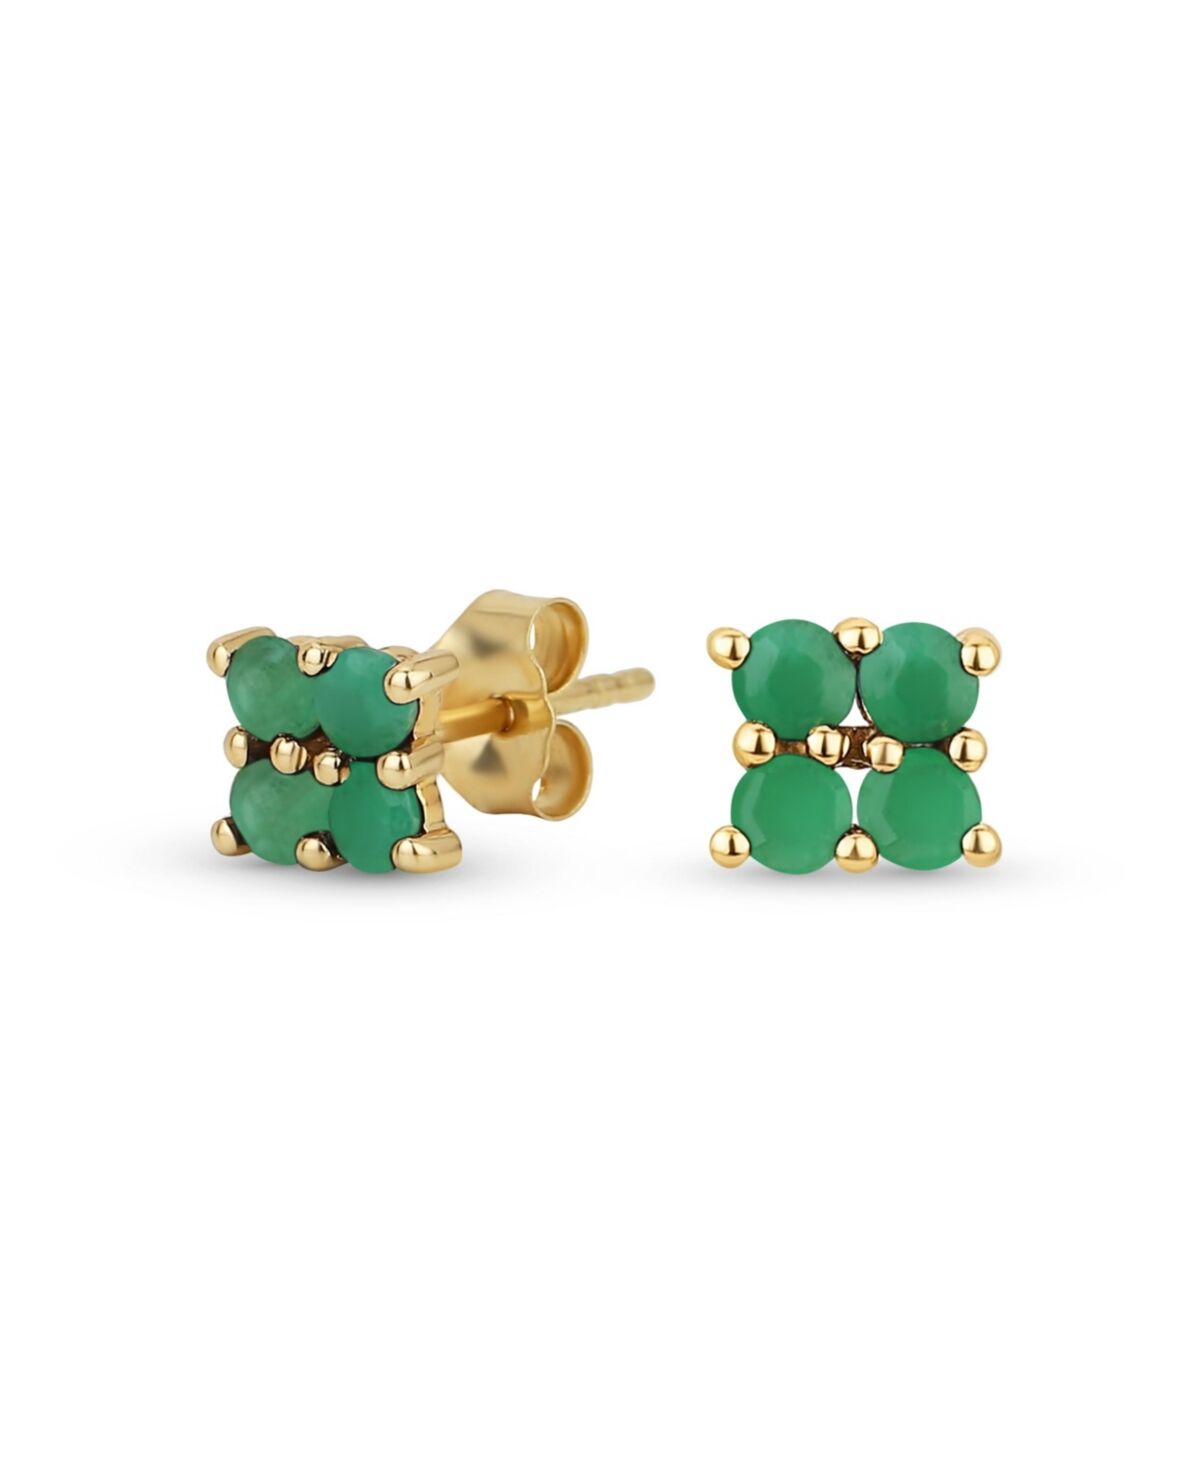 Bling Jewelry Minimalist Geometric Genuine 14K Yellow Gold Square Gemstone Stud Earrings for Women Teens - Green